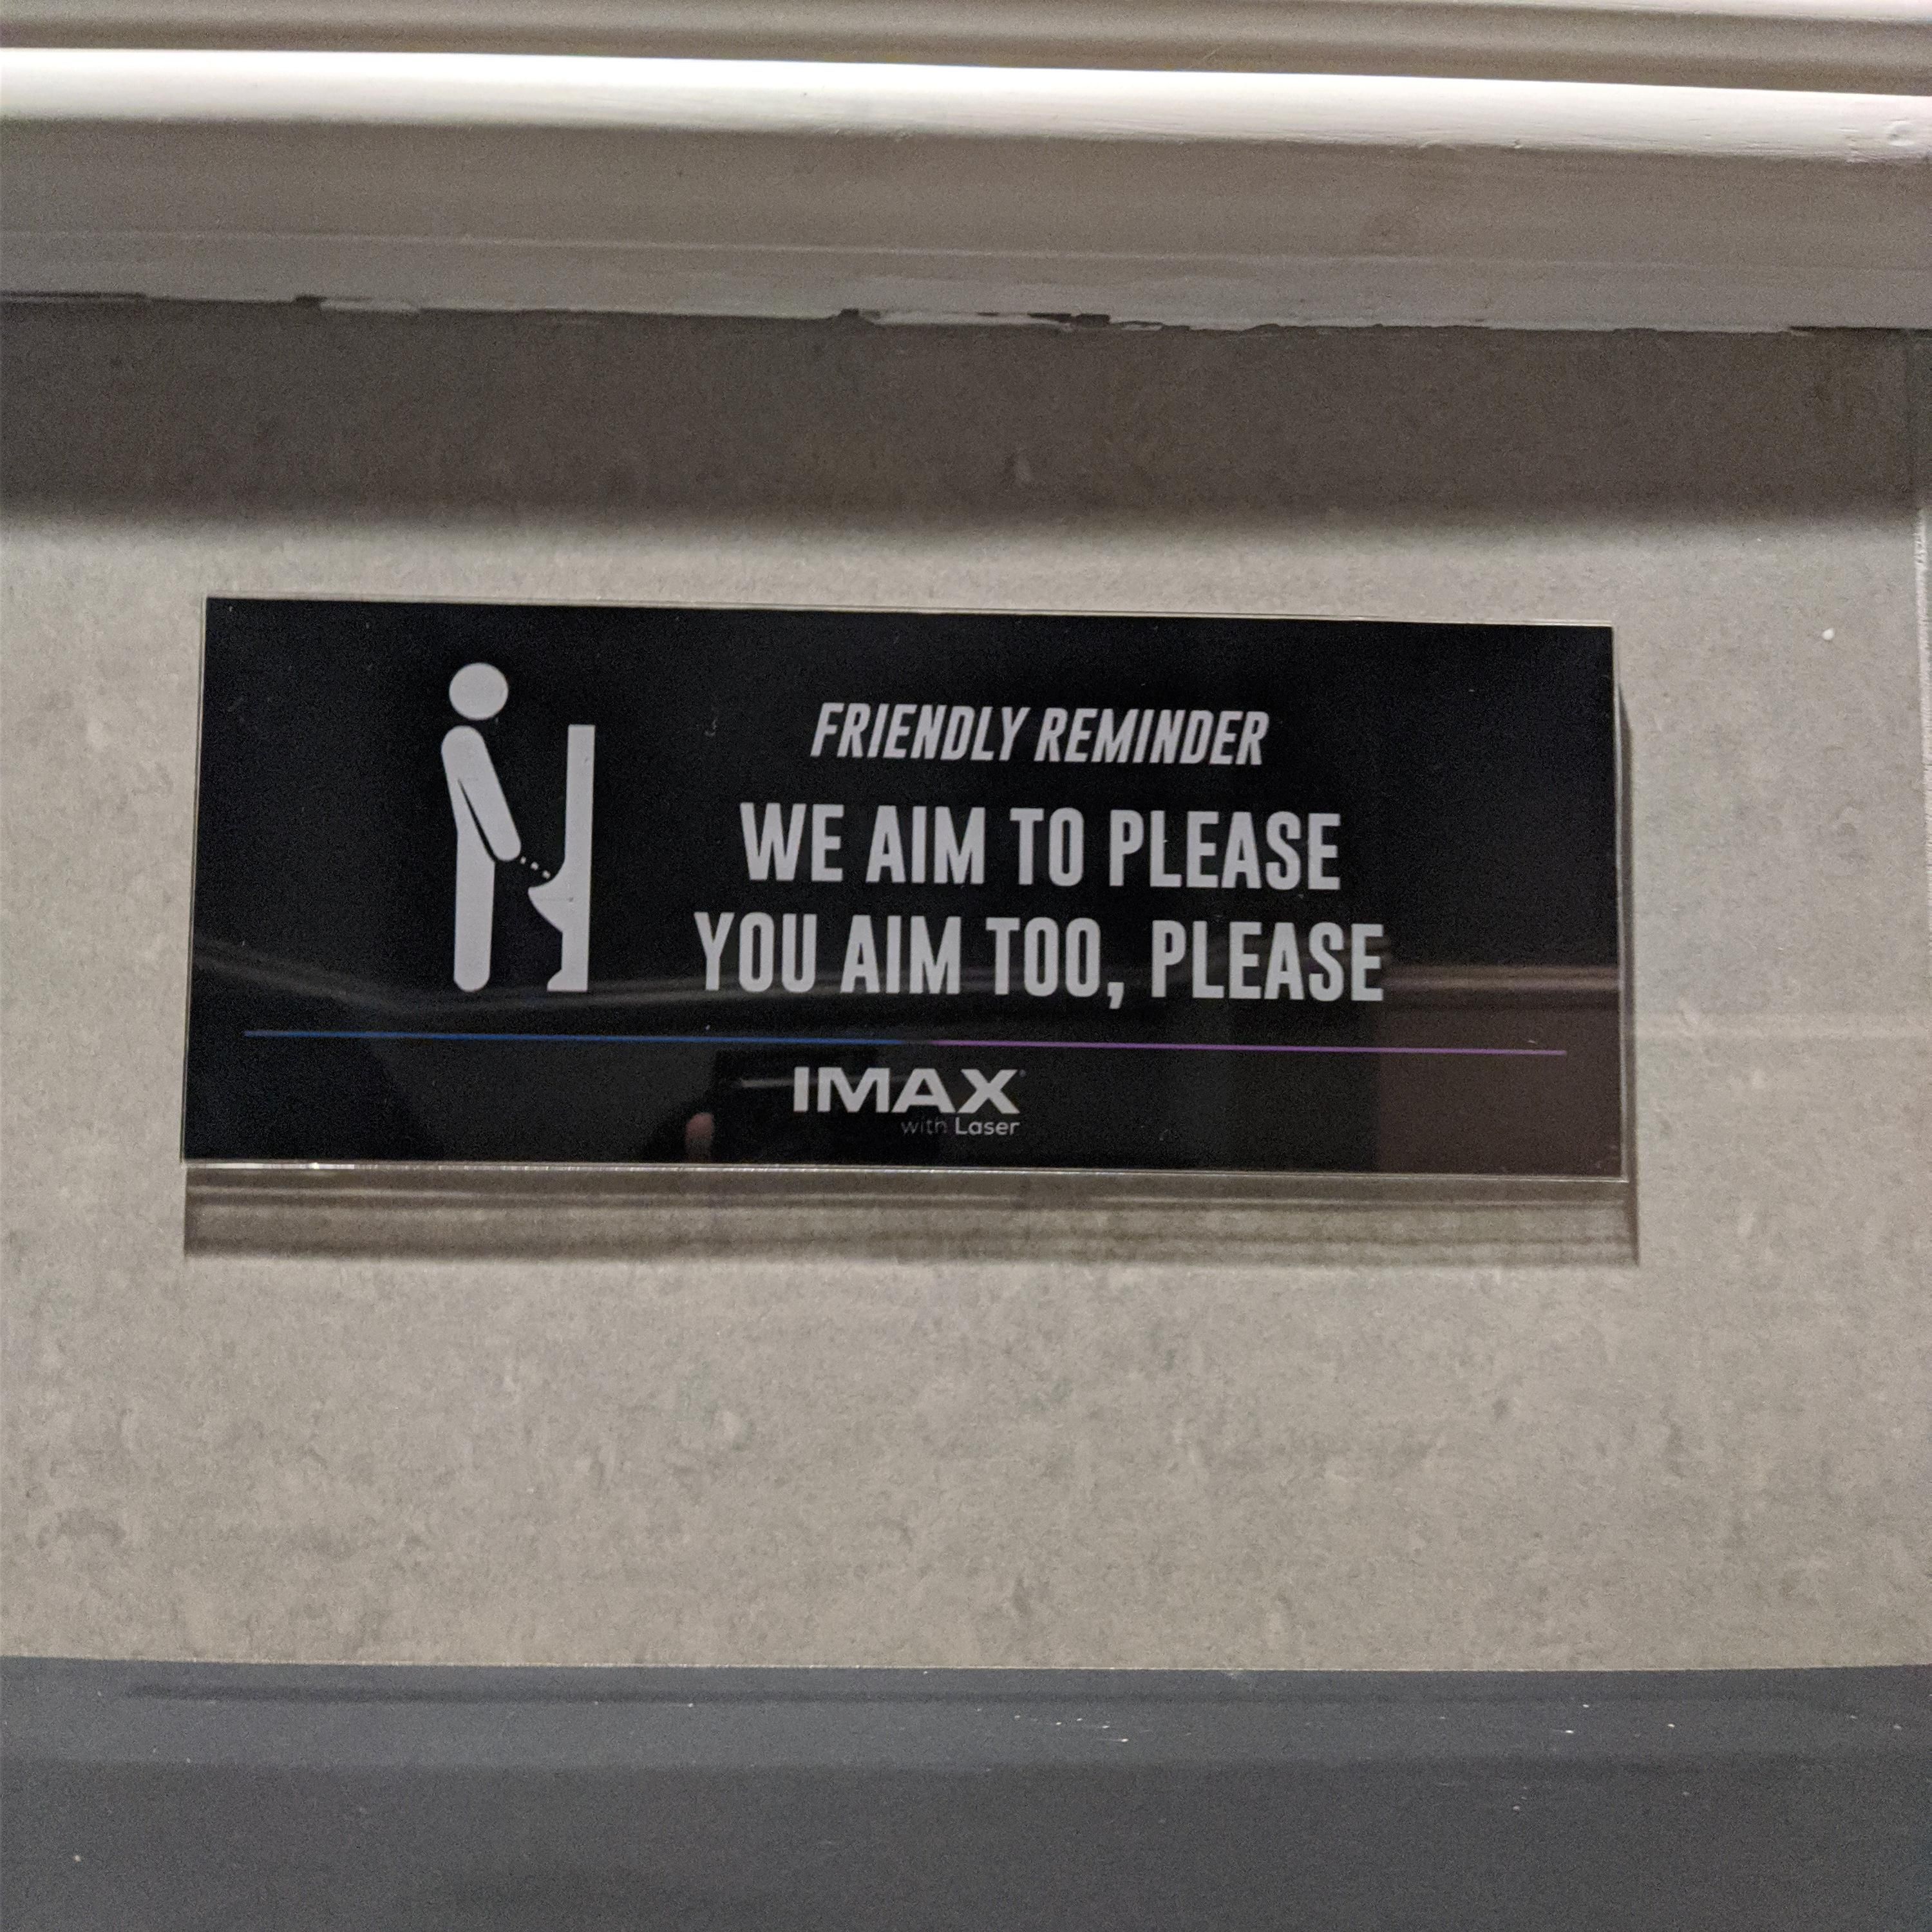 A sign at our local cinema's bathroom.